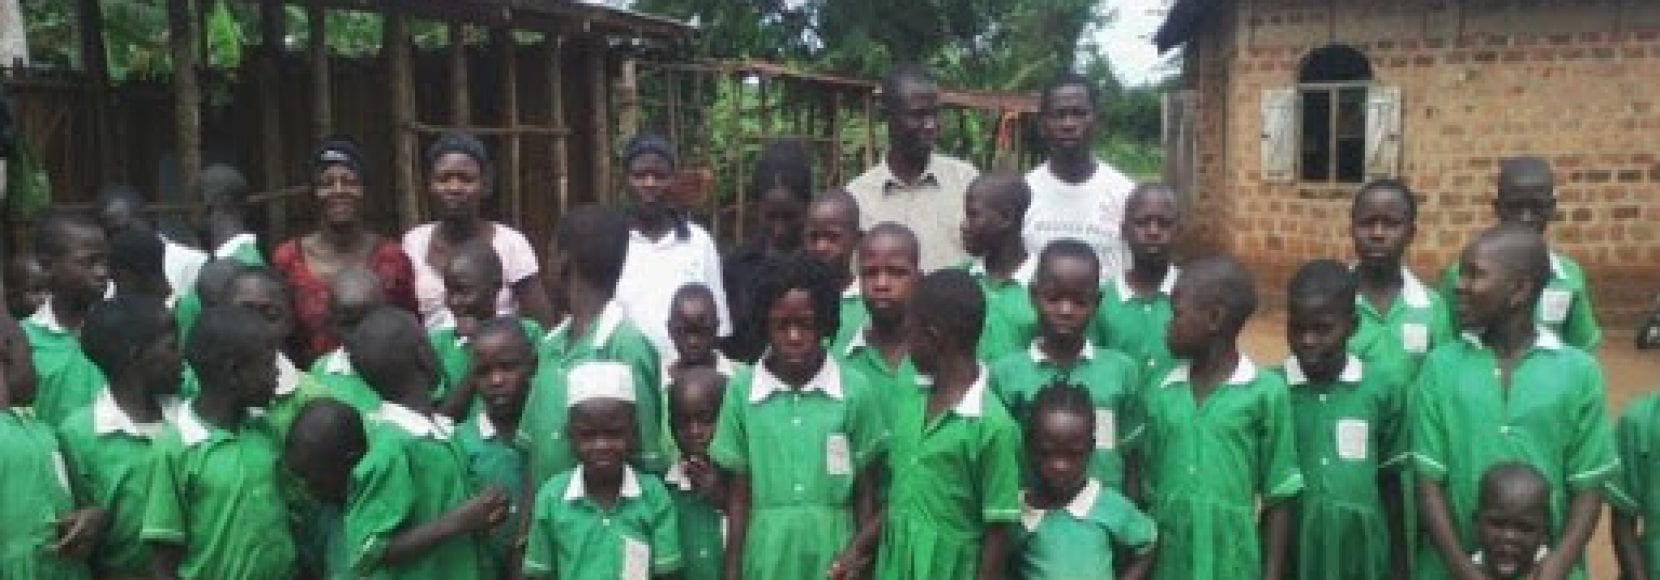 Group of kids and teachers in Uganda